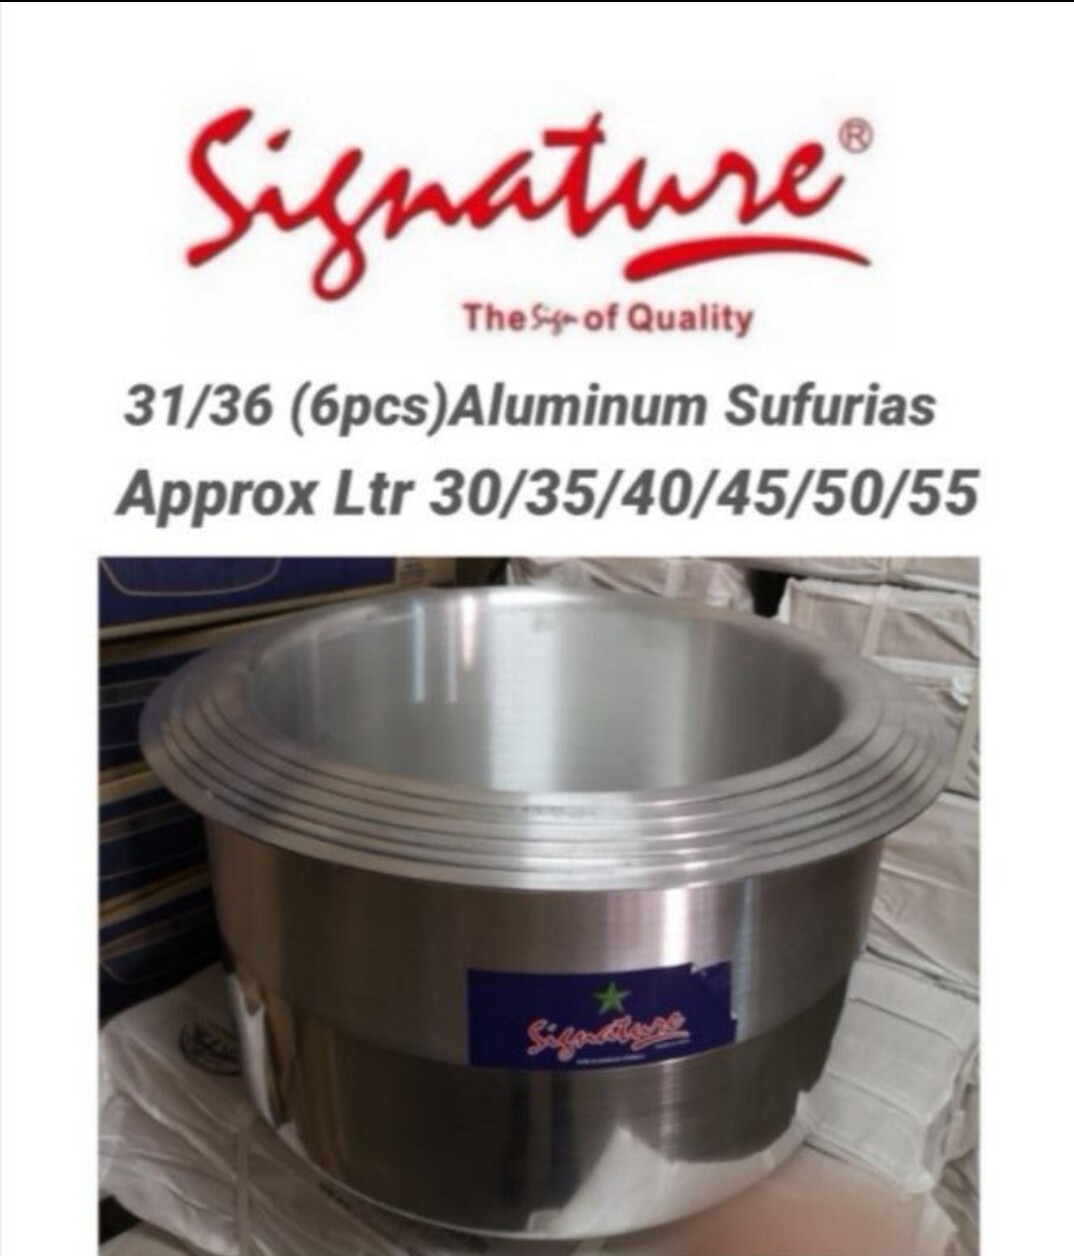 Signature cookware large aluminium kookibg pots 31/36 (6pcs) Aluminum Sufurias